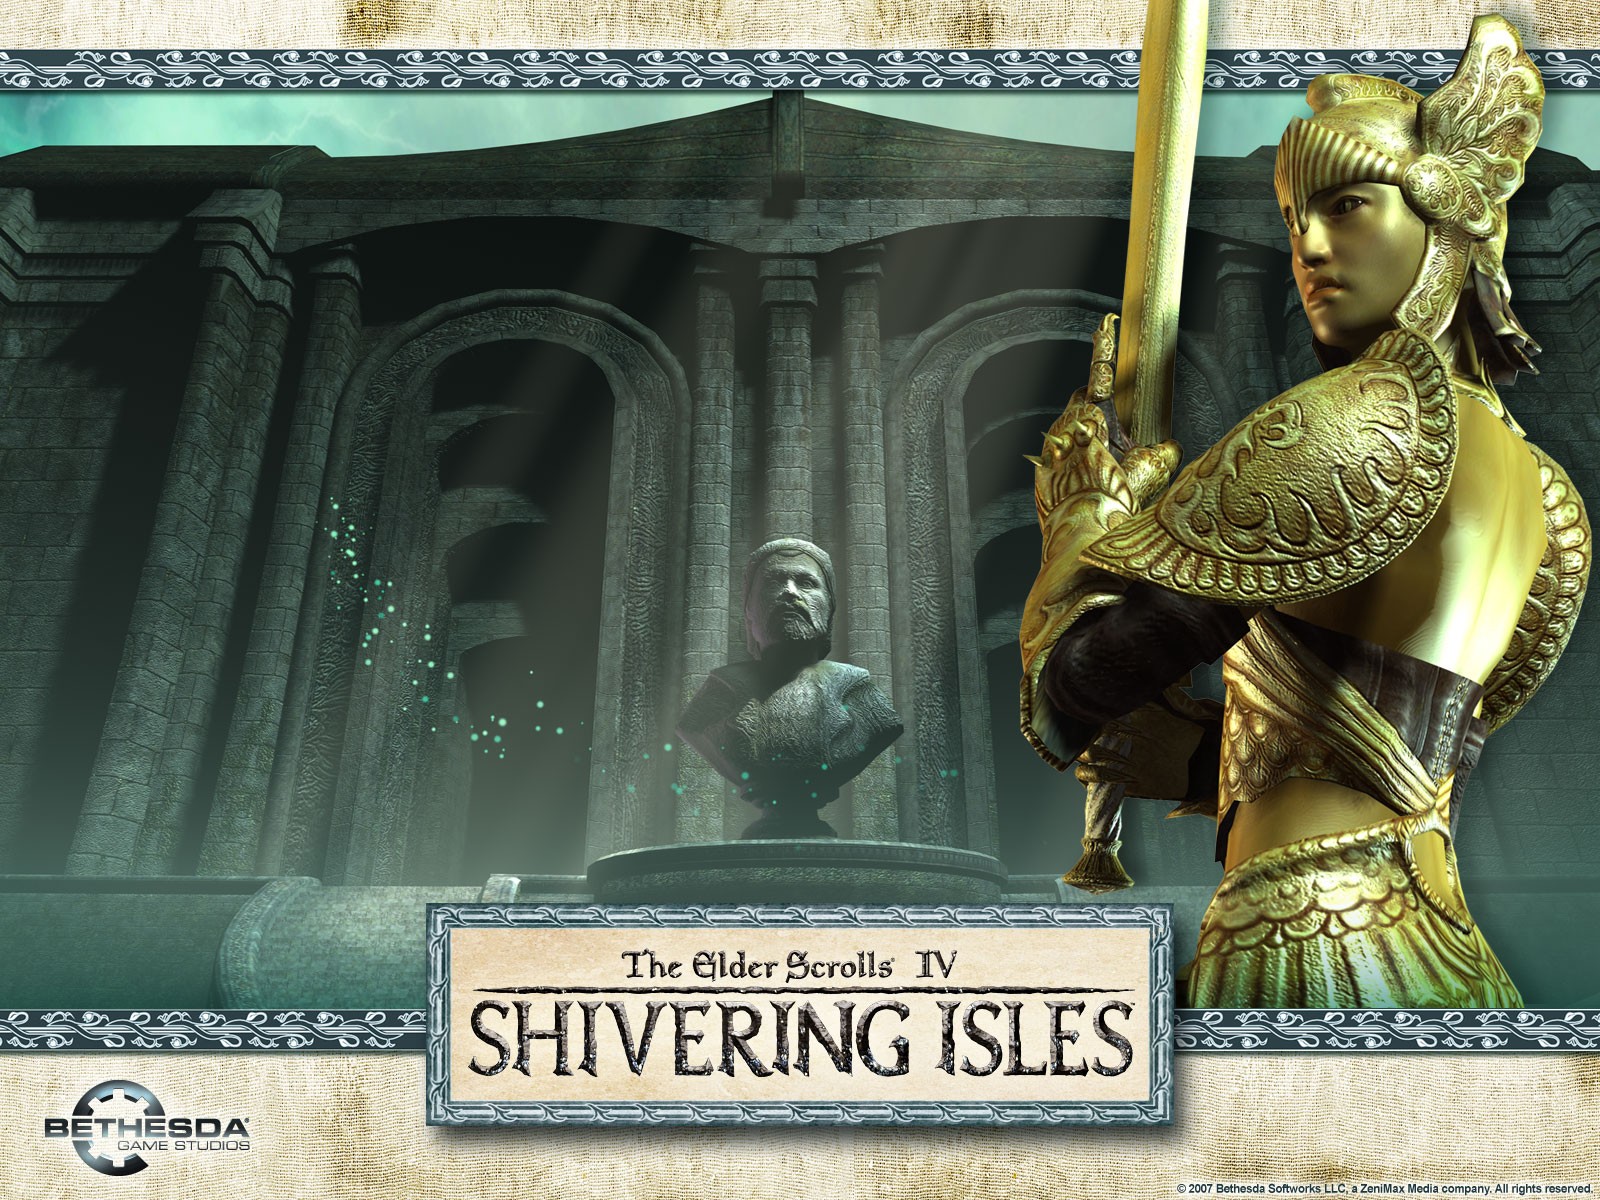 General 1600x1200 video games The Elder Scrolls IV: Oblivion Shivering Isles PC gaming Bethesda Softworks RPG video game art 2007 (Year)